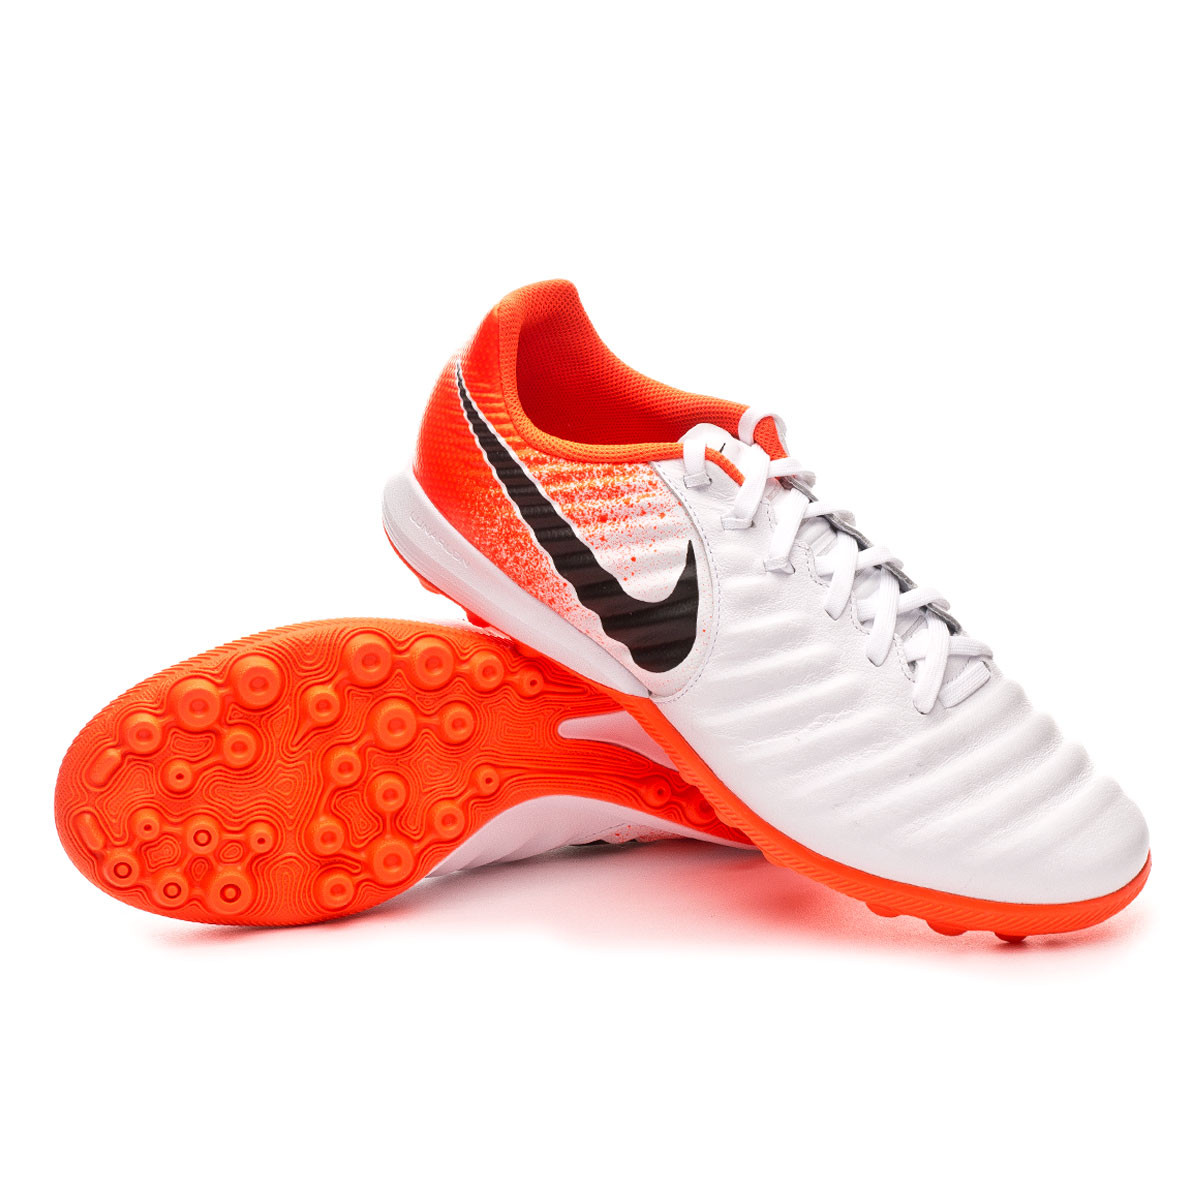 Football Boot Nike Lunar LegendX 7 Pro Turf White-Black-Hyper crimson -  Football store Fútbol Emotion